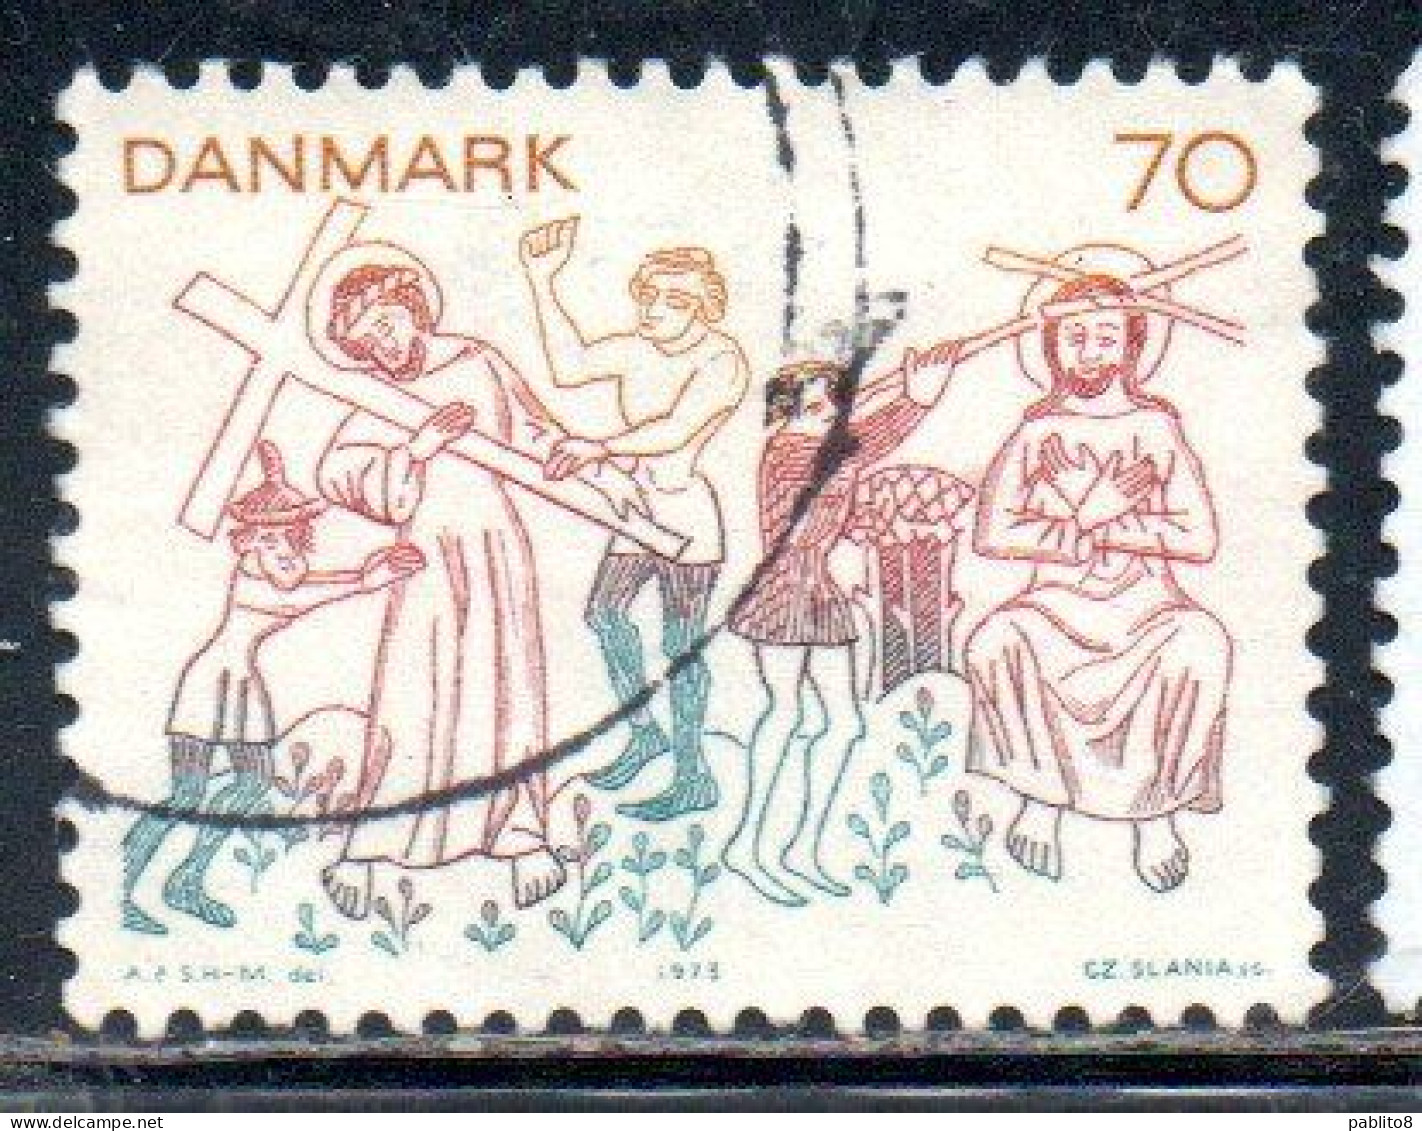 DANEMARK DANMARK DENMARK DANIMARCA 1973 CHRISTMAS NATALE NOEL WEIHNACHTEN NAVIDAD FRESCOES 70o USED USATO OBLITERE' - Gebraucht